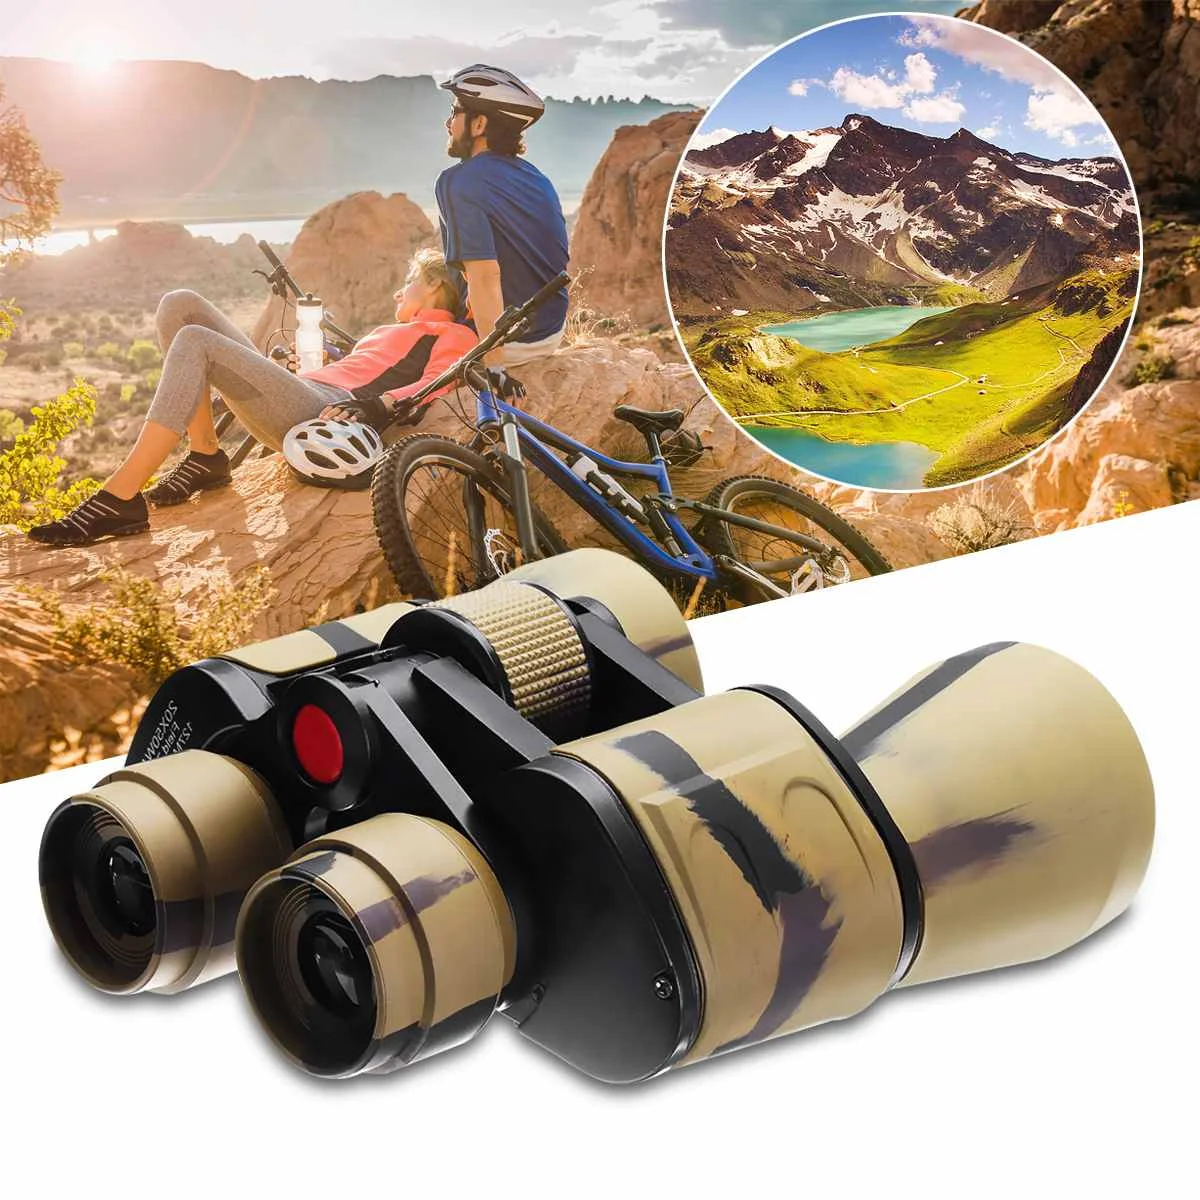 

20x-50x Zoom HD Camouflage Binoculars Birdwatching Telescope w/Bag Night Vision Hunting Travel Concert Telescope Outdoor Sports